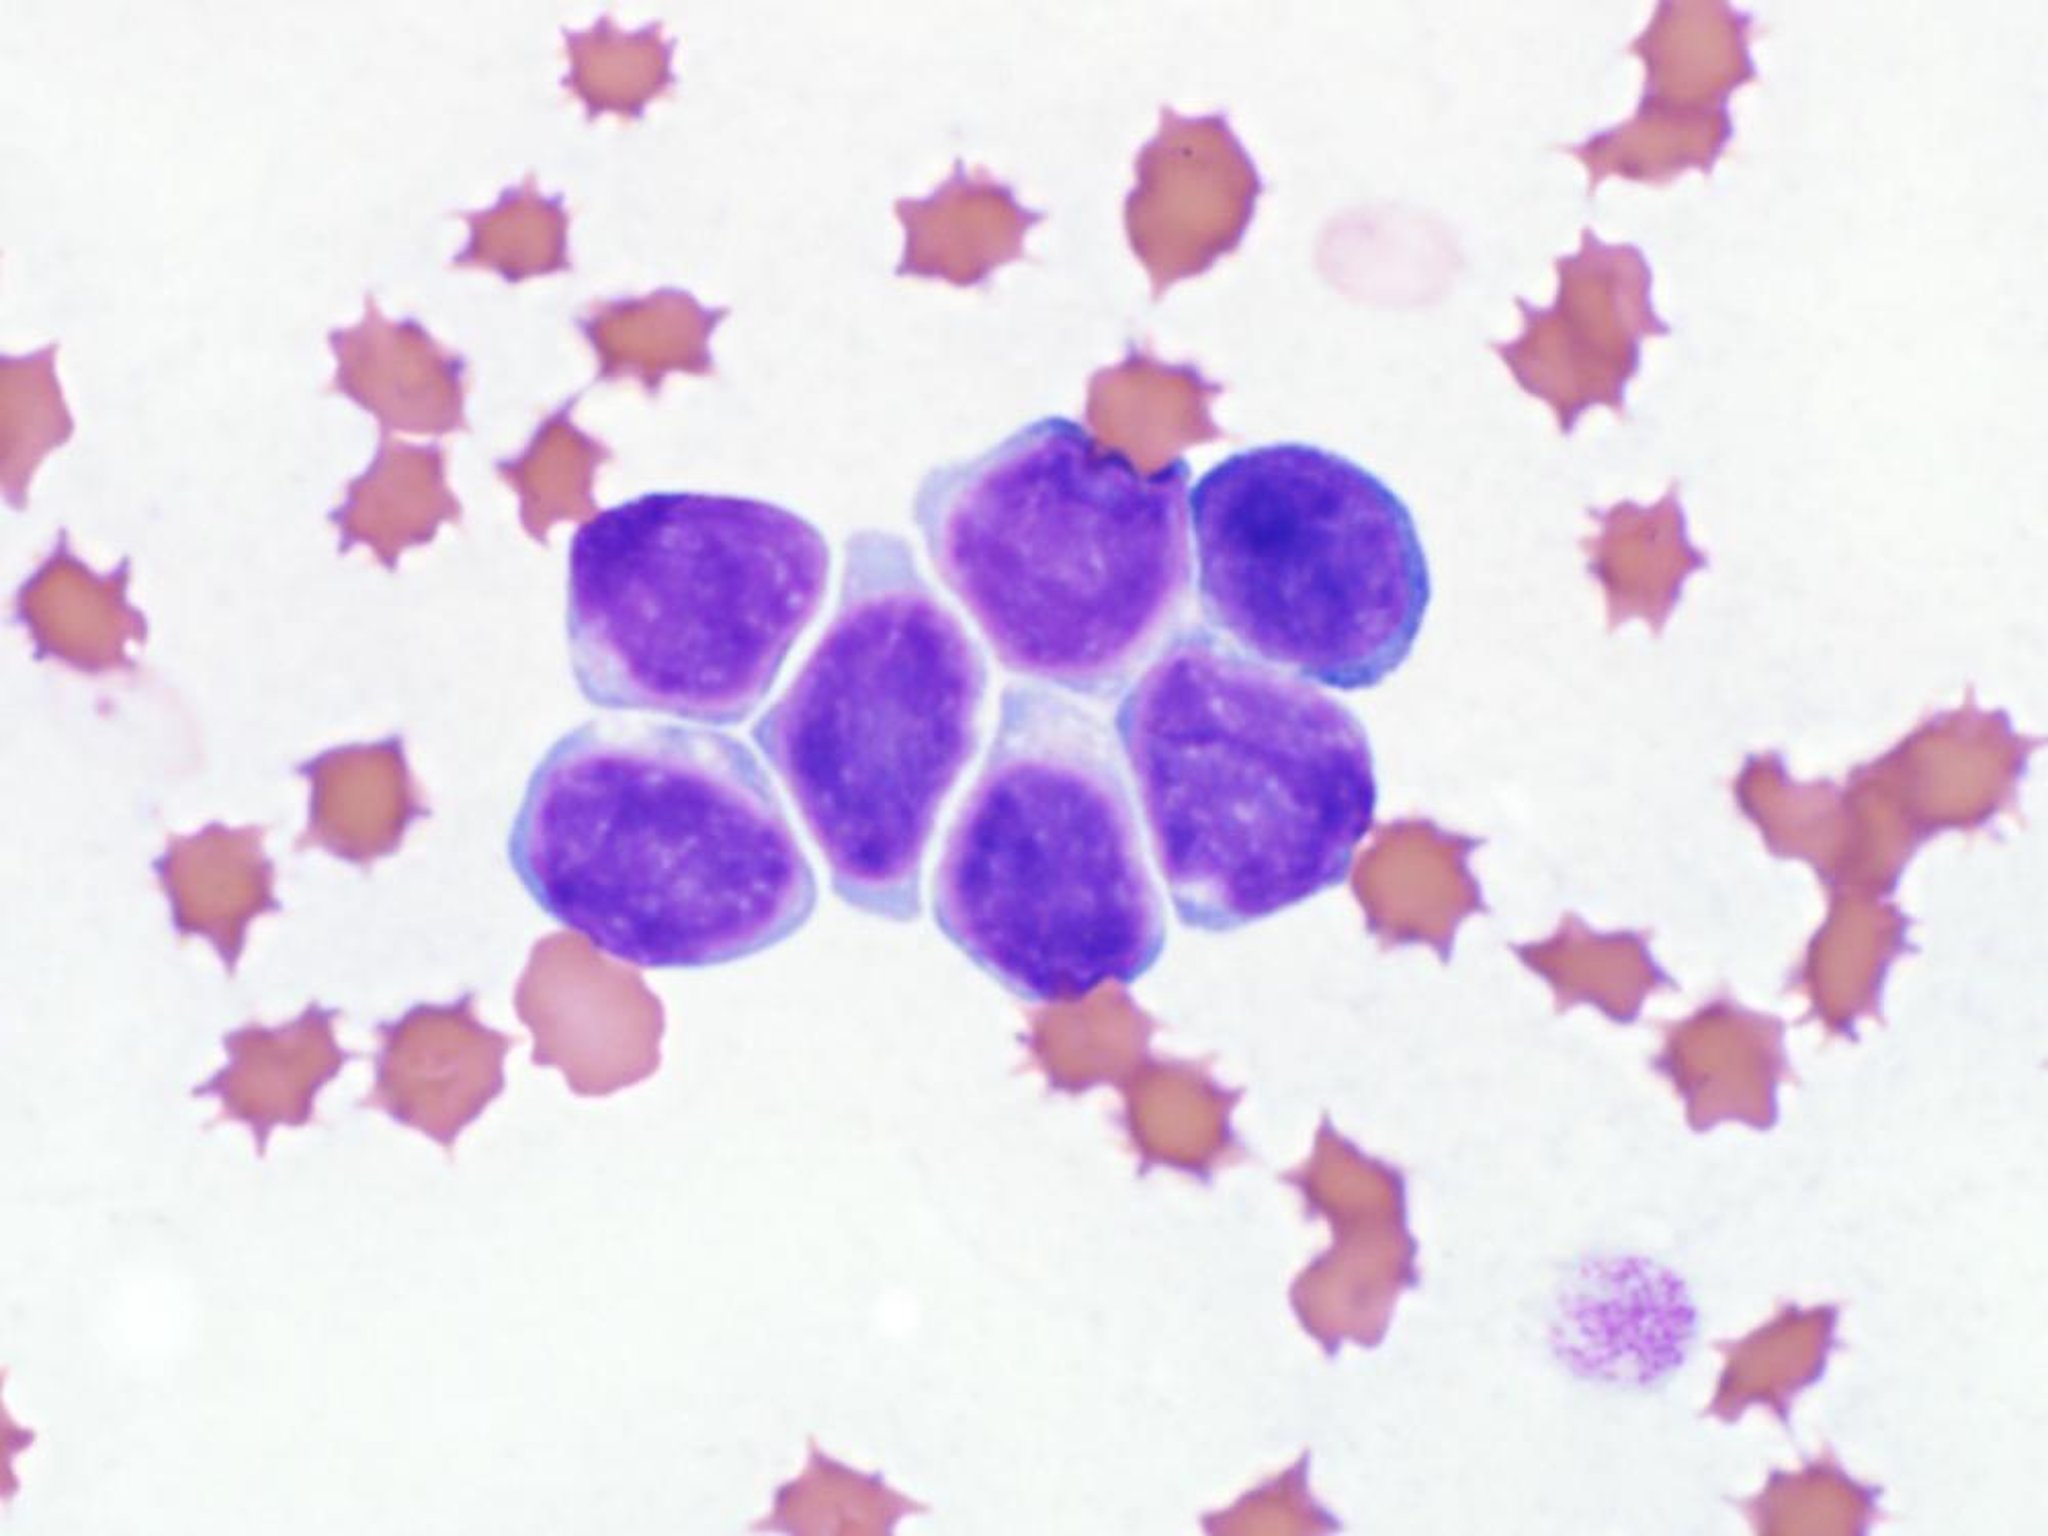 Leukocyte agglutination, blood smear, cat